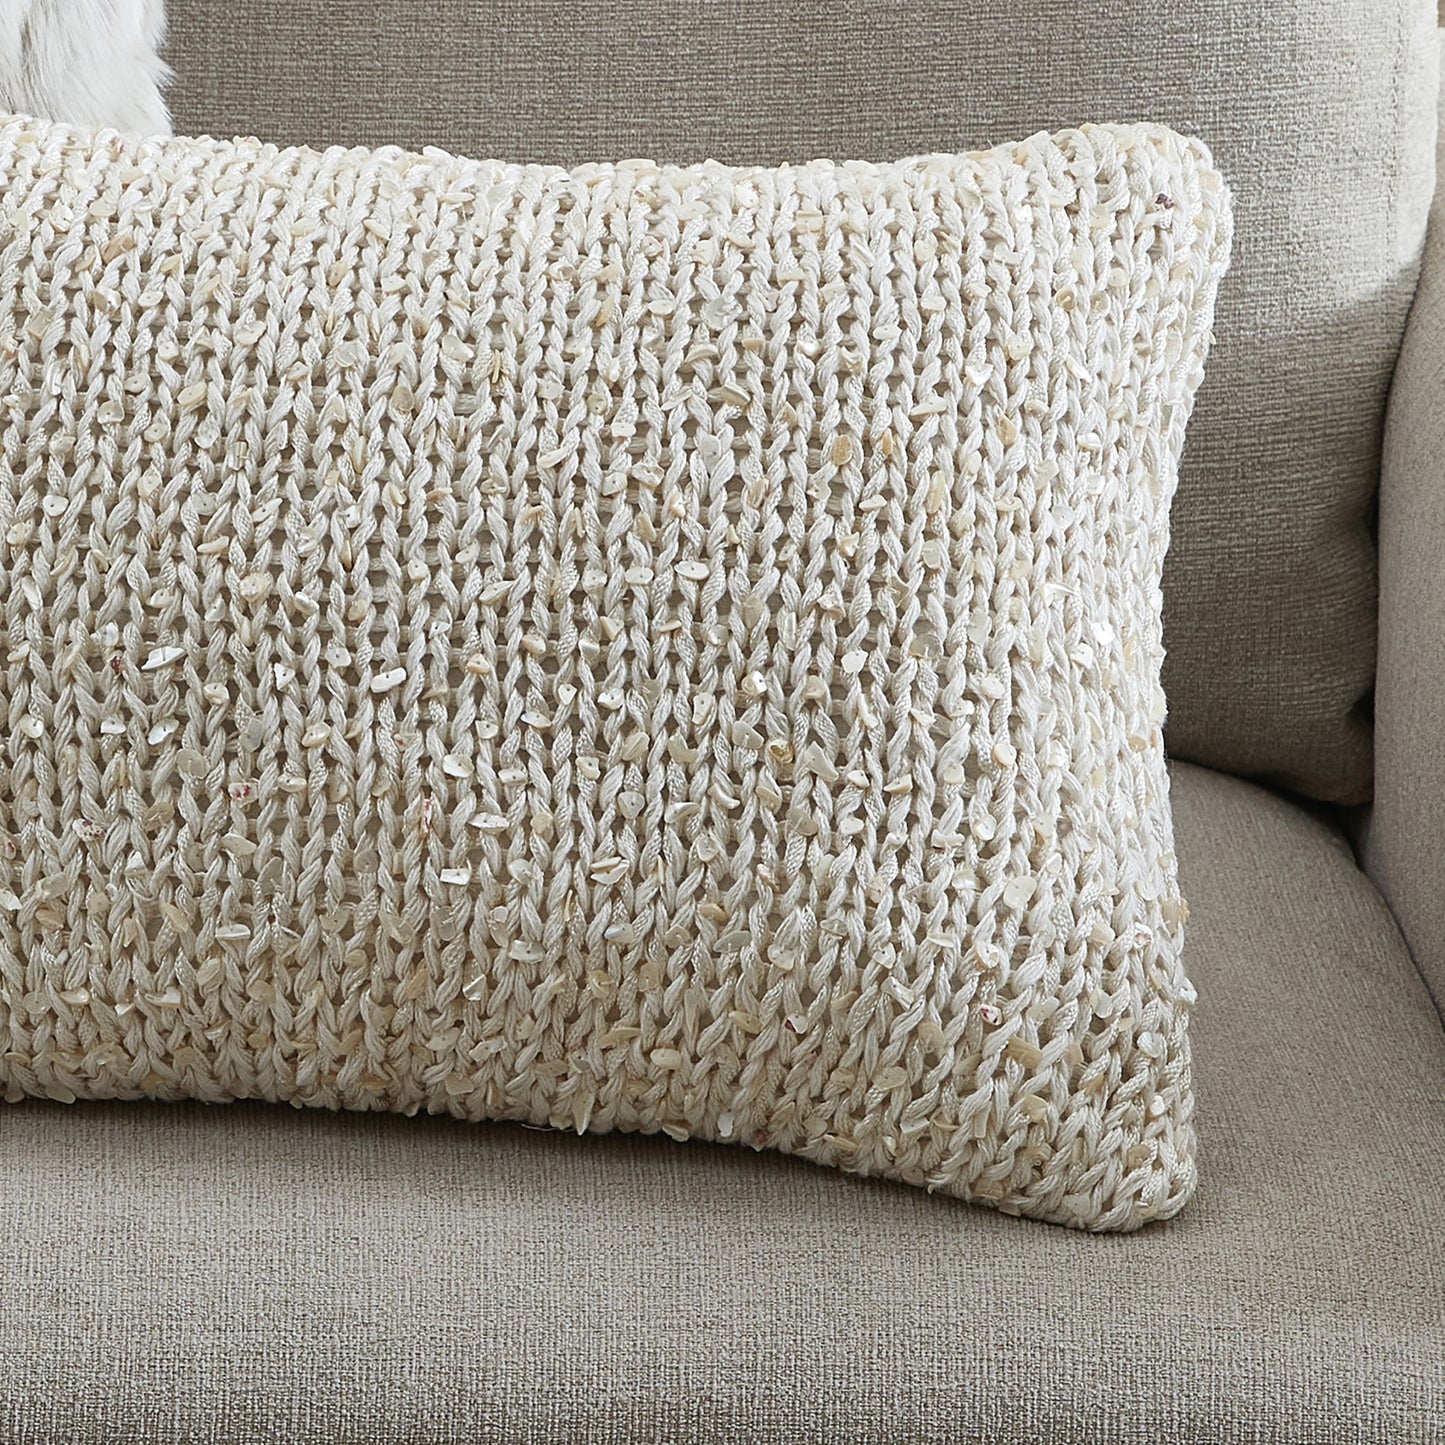 Michael Aram Braided Texture Dec Pillow Ivory